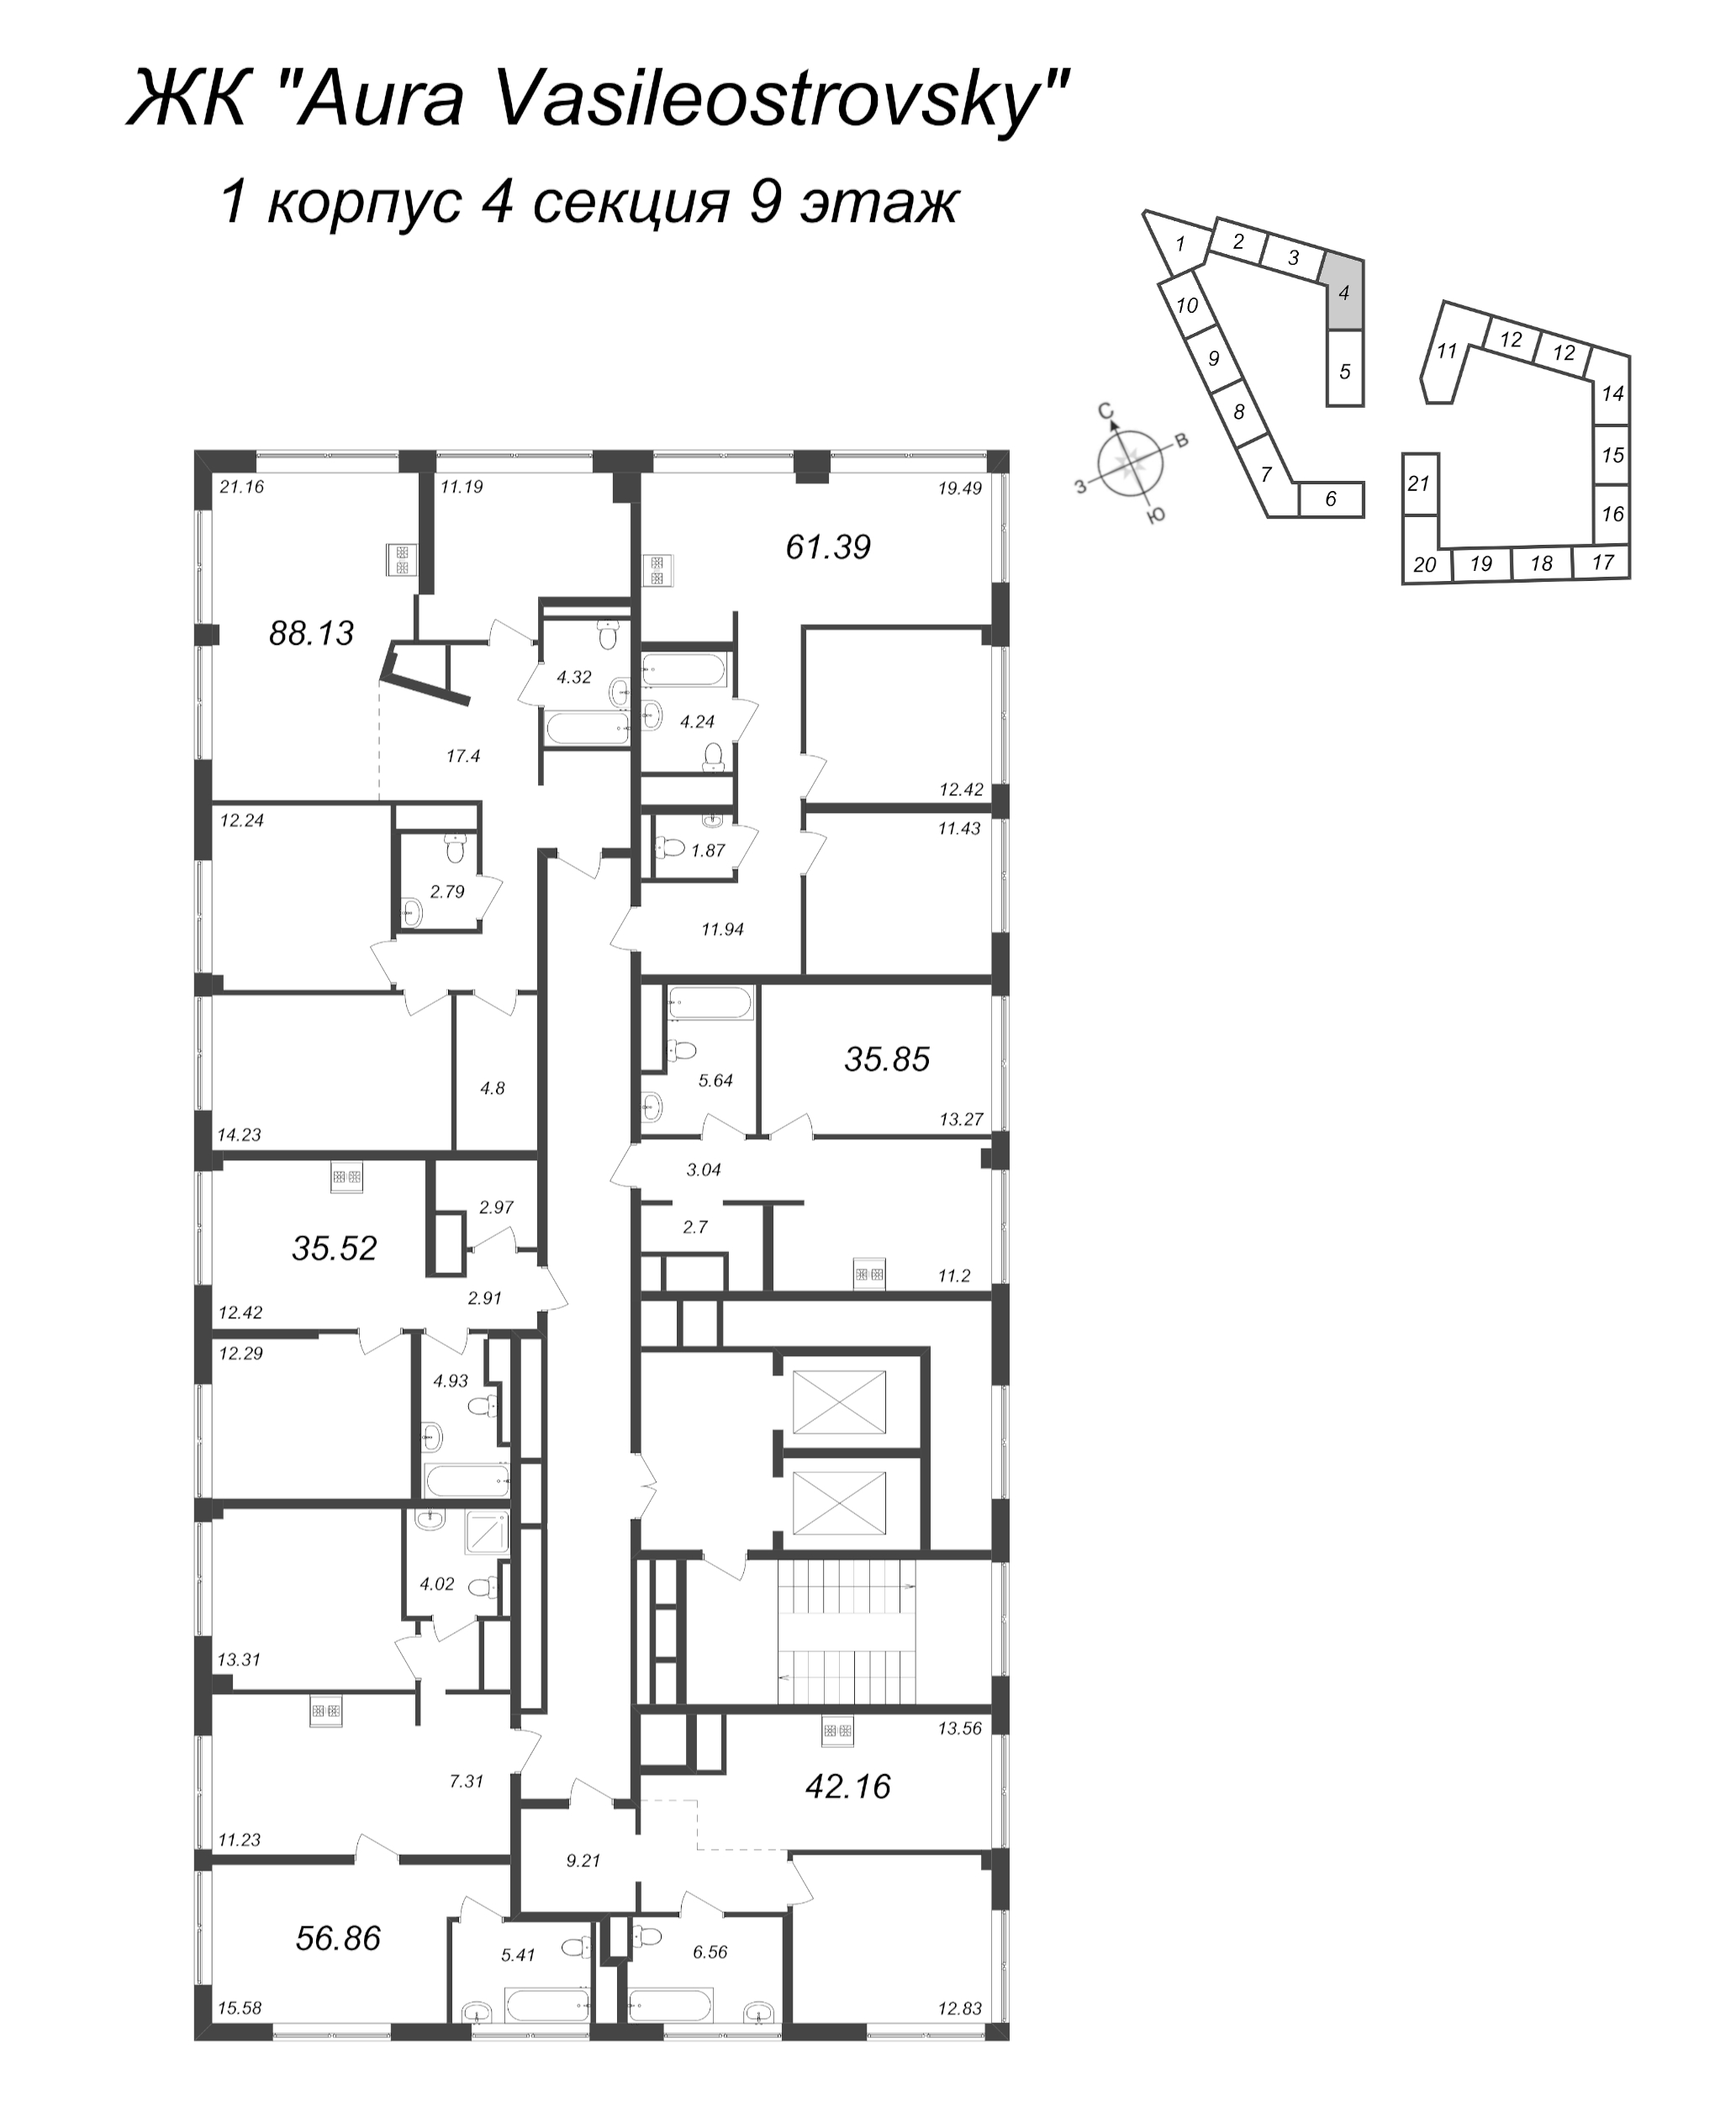 4-комнатная (Евро) квартира, 84.77 м² - планировка этажа